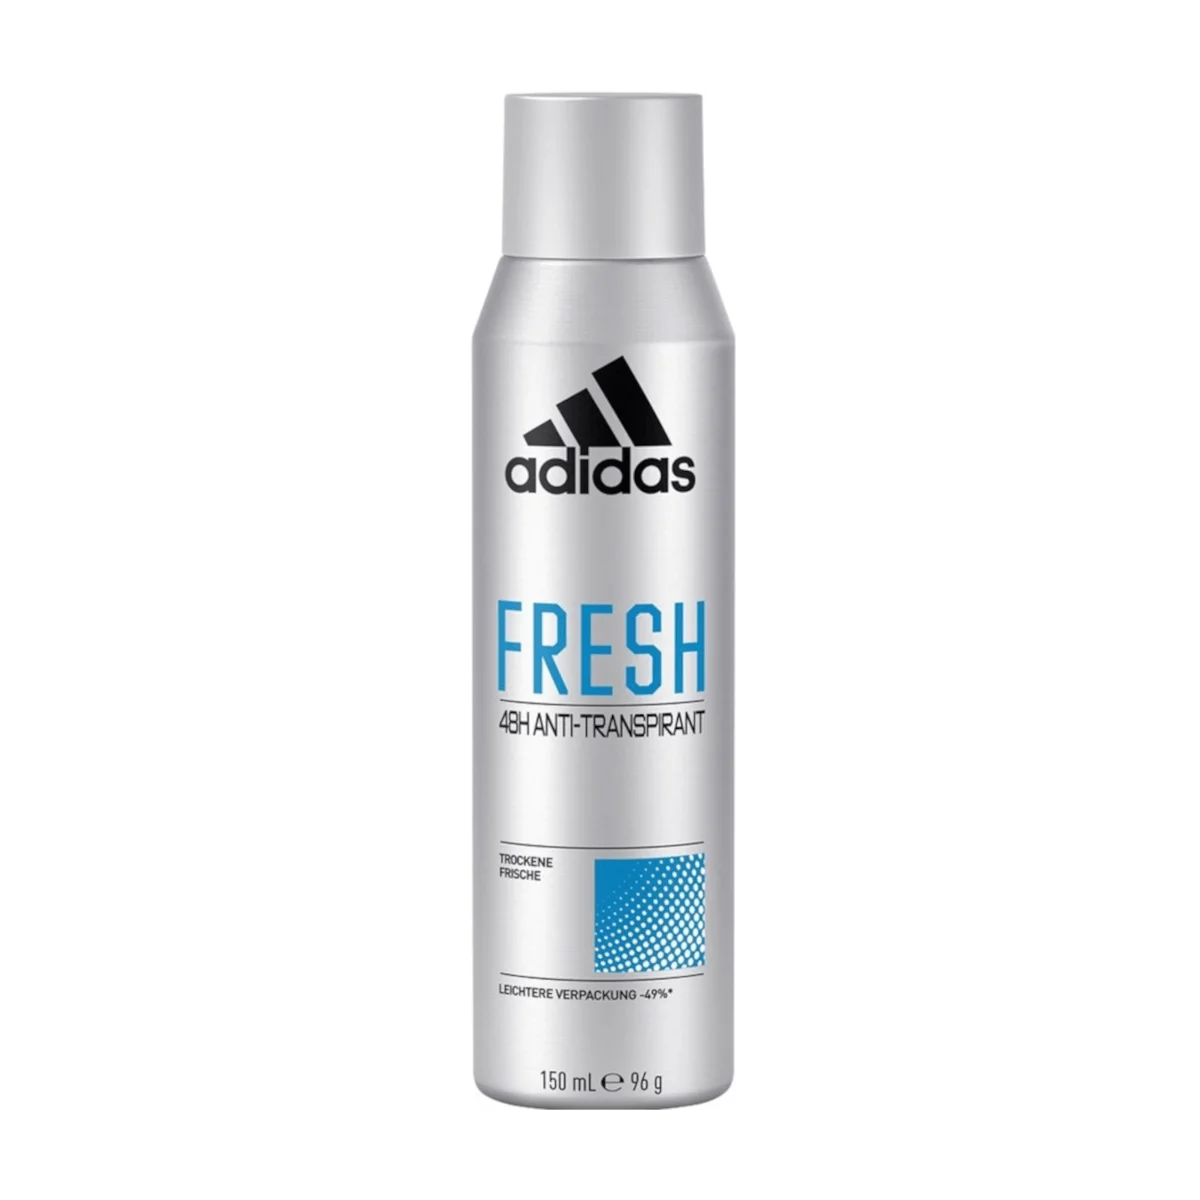 Adidas Men Deospray - Anti-Transpirant Fresh, 150 ml